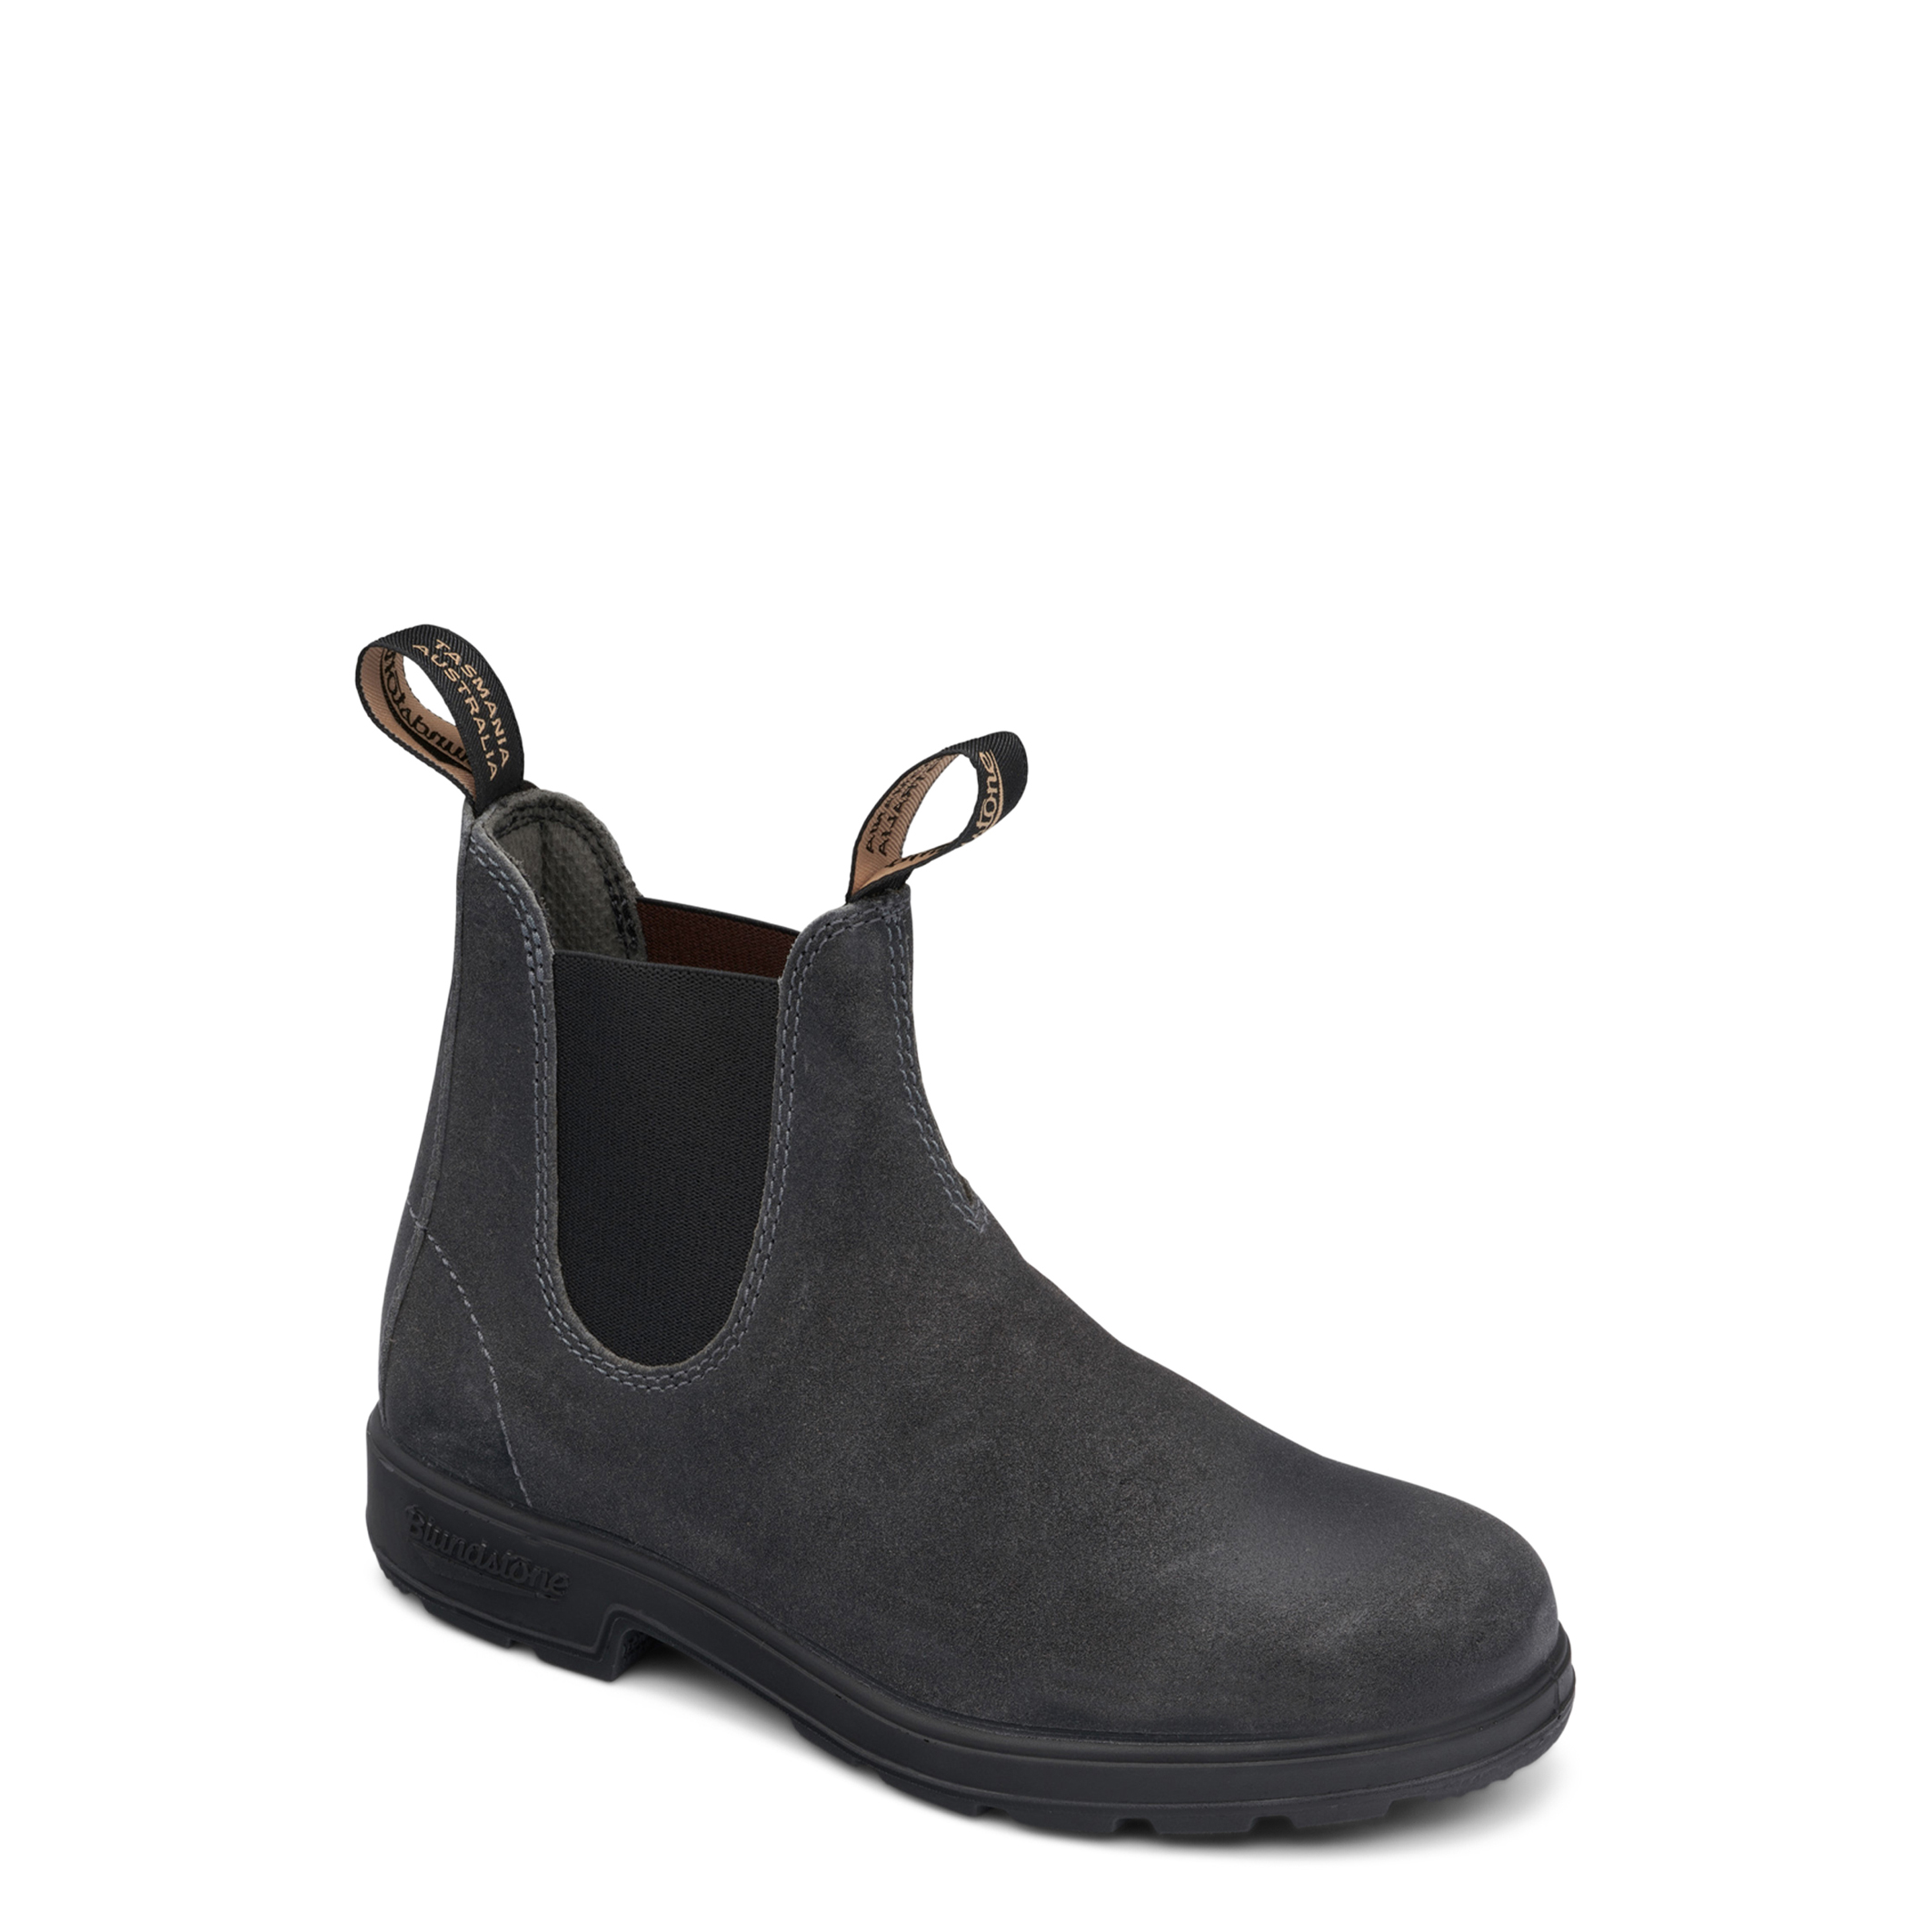 Blundstone Grey Ankle boots for Men - ORIGINALS-1910